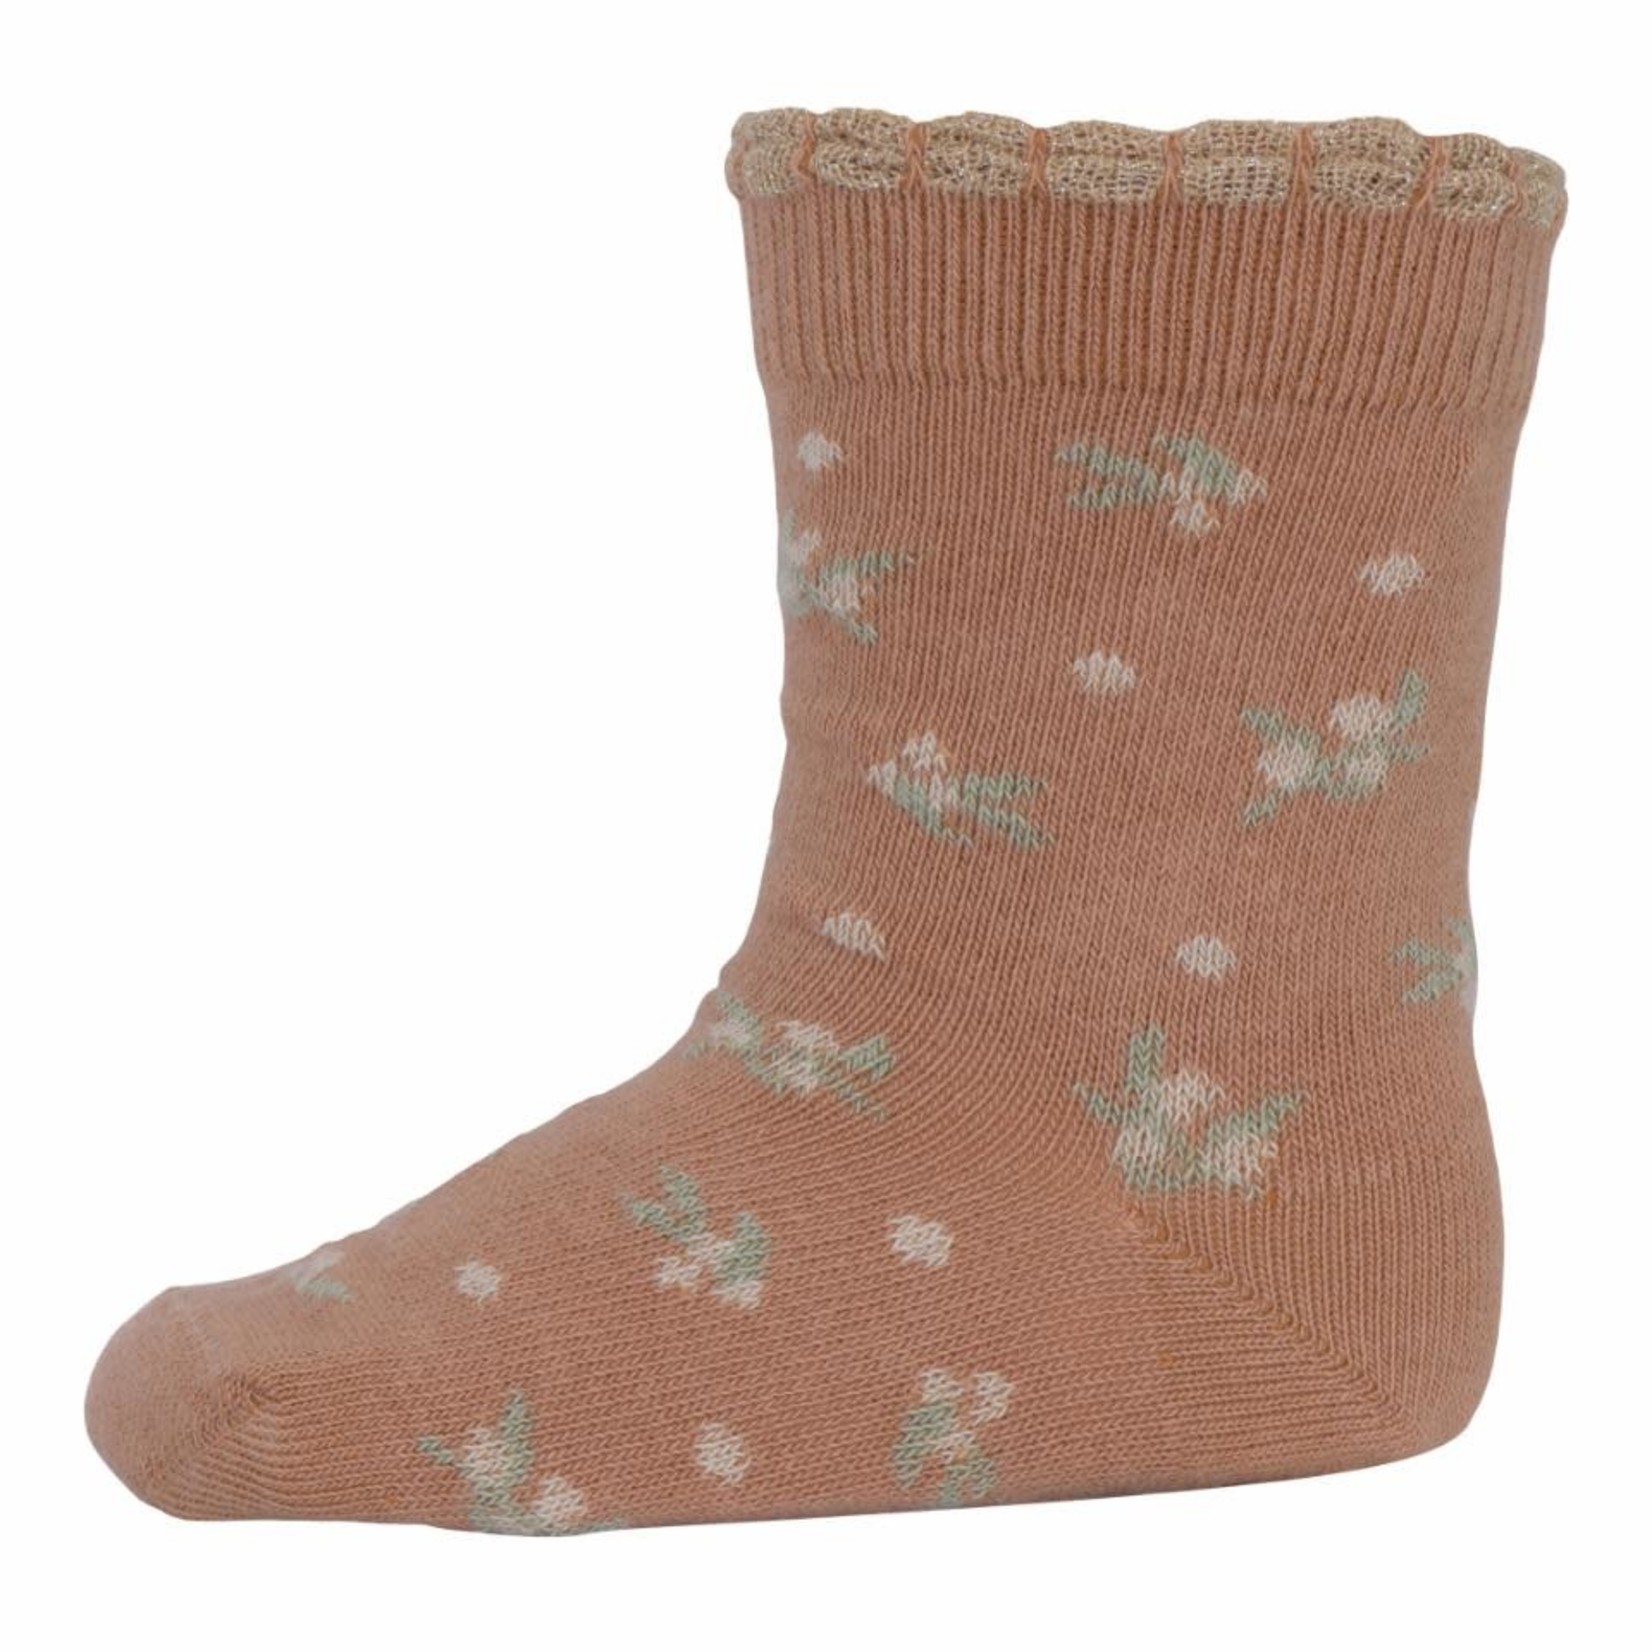 MP bloom socks - tawny brown